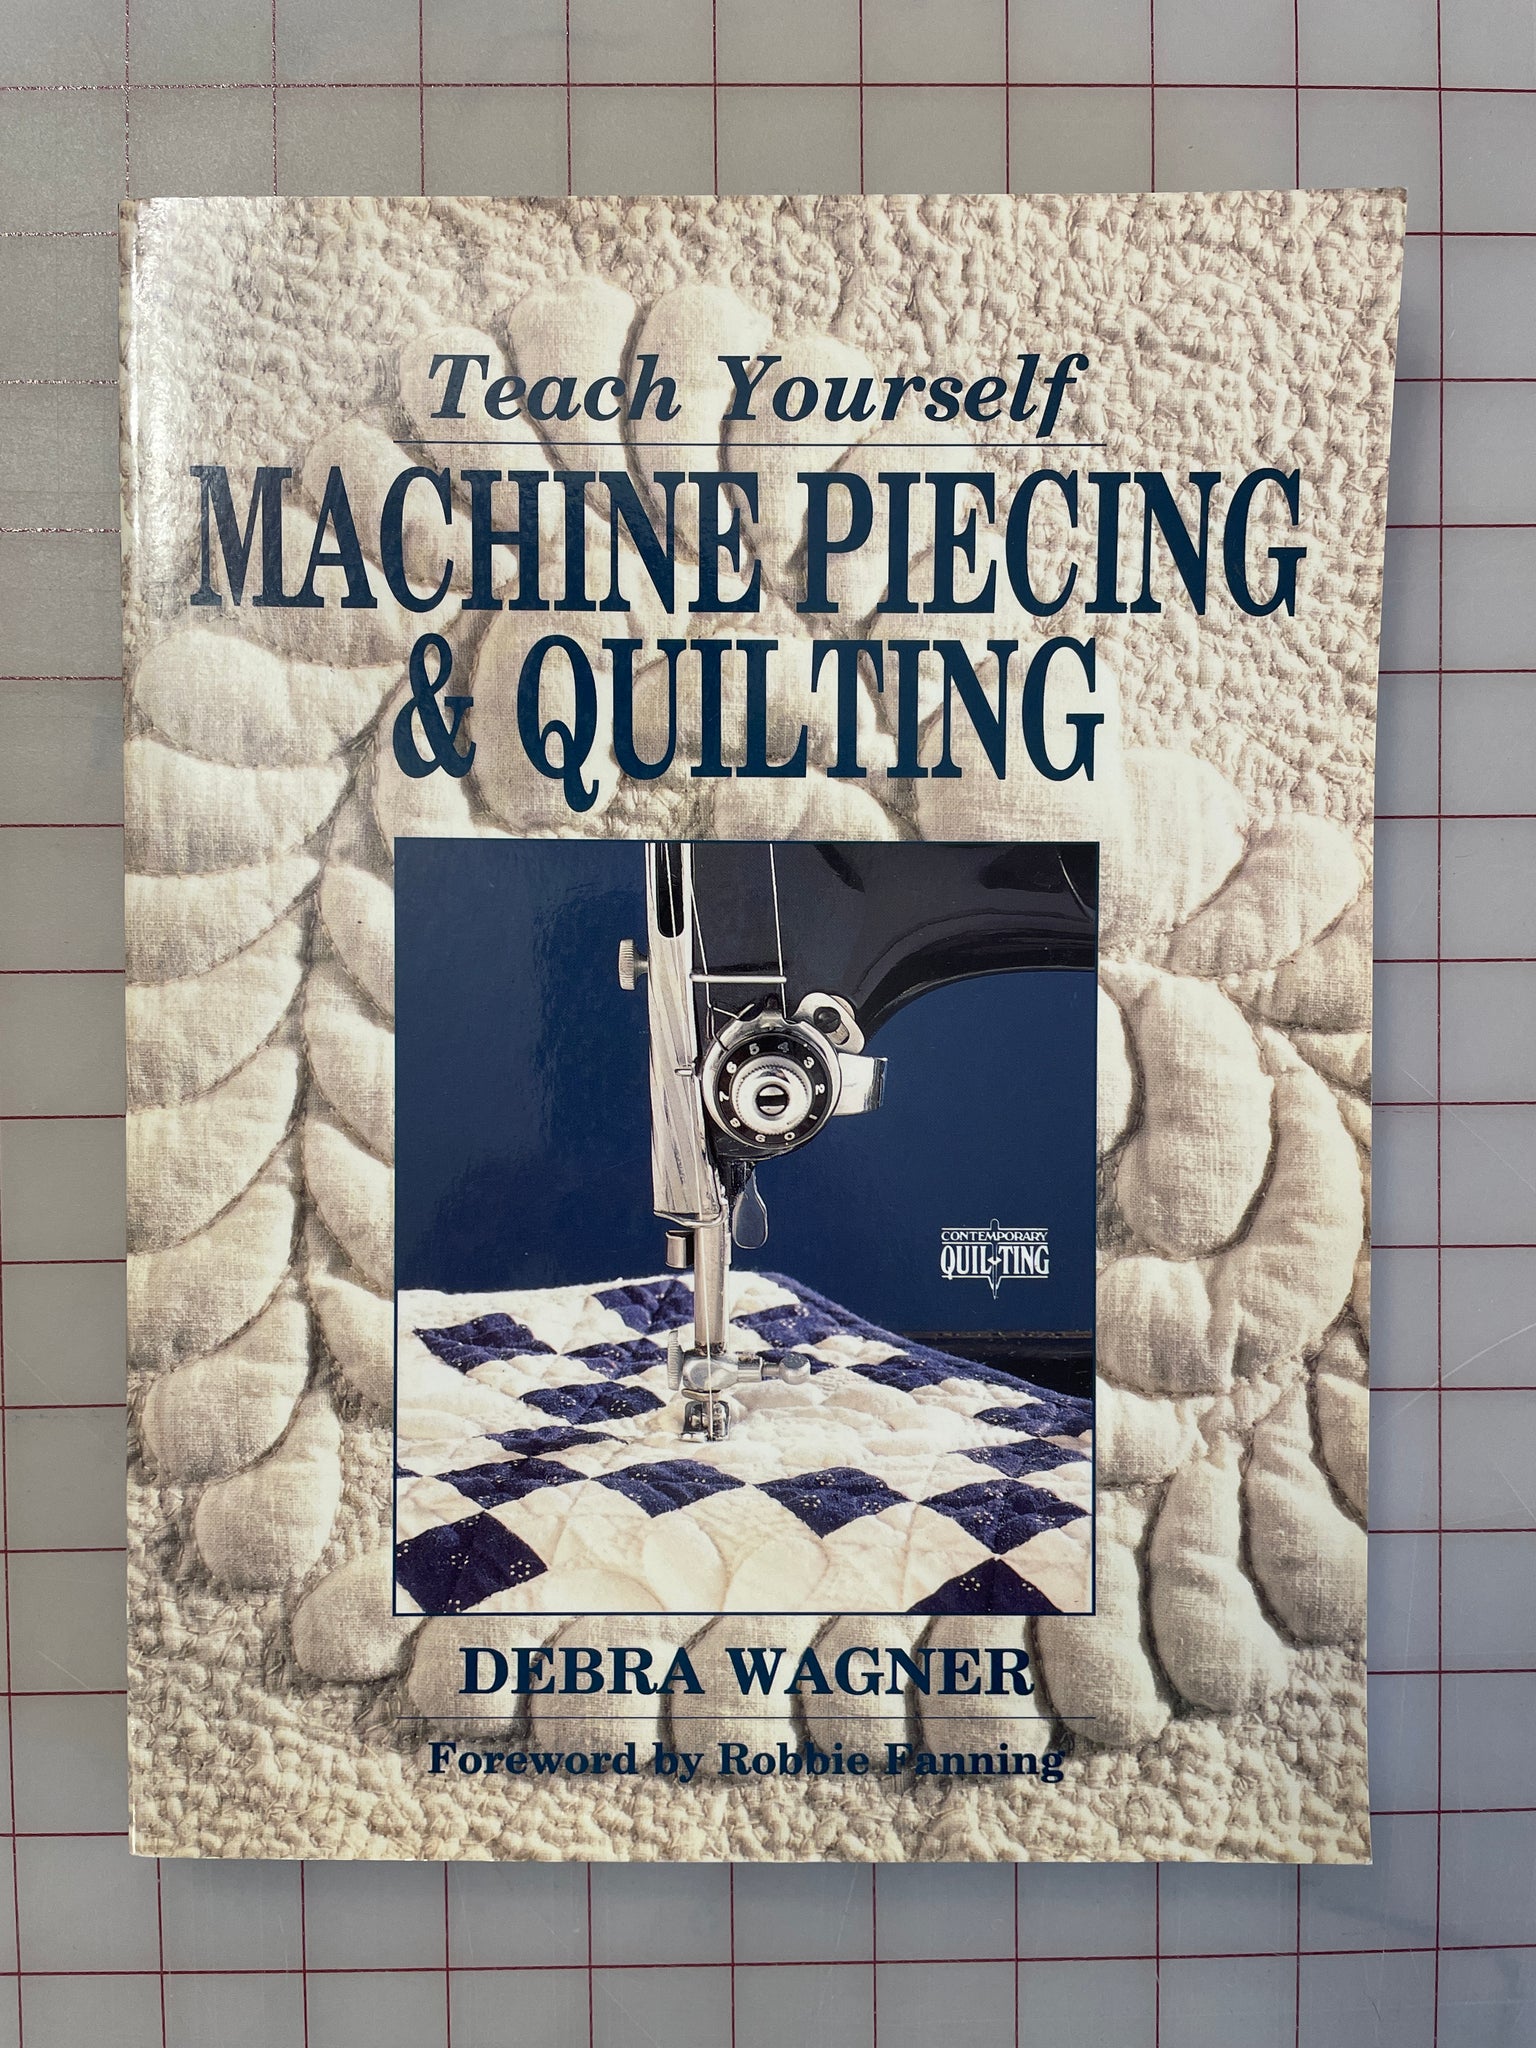 SALE 1992 Book - "Teach Yourself Machine Piecing & Quilting"